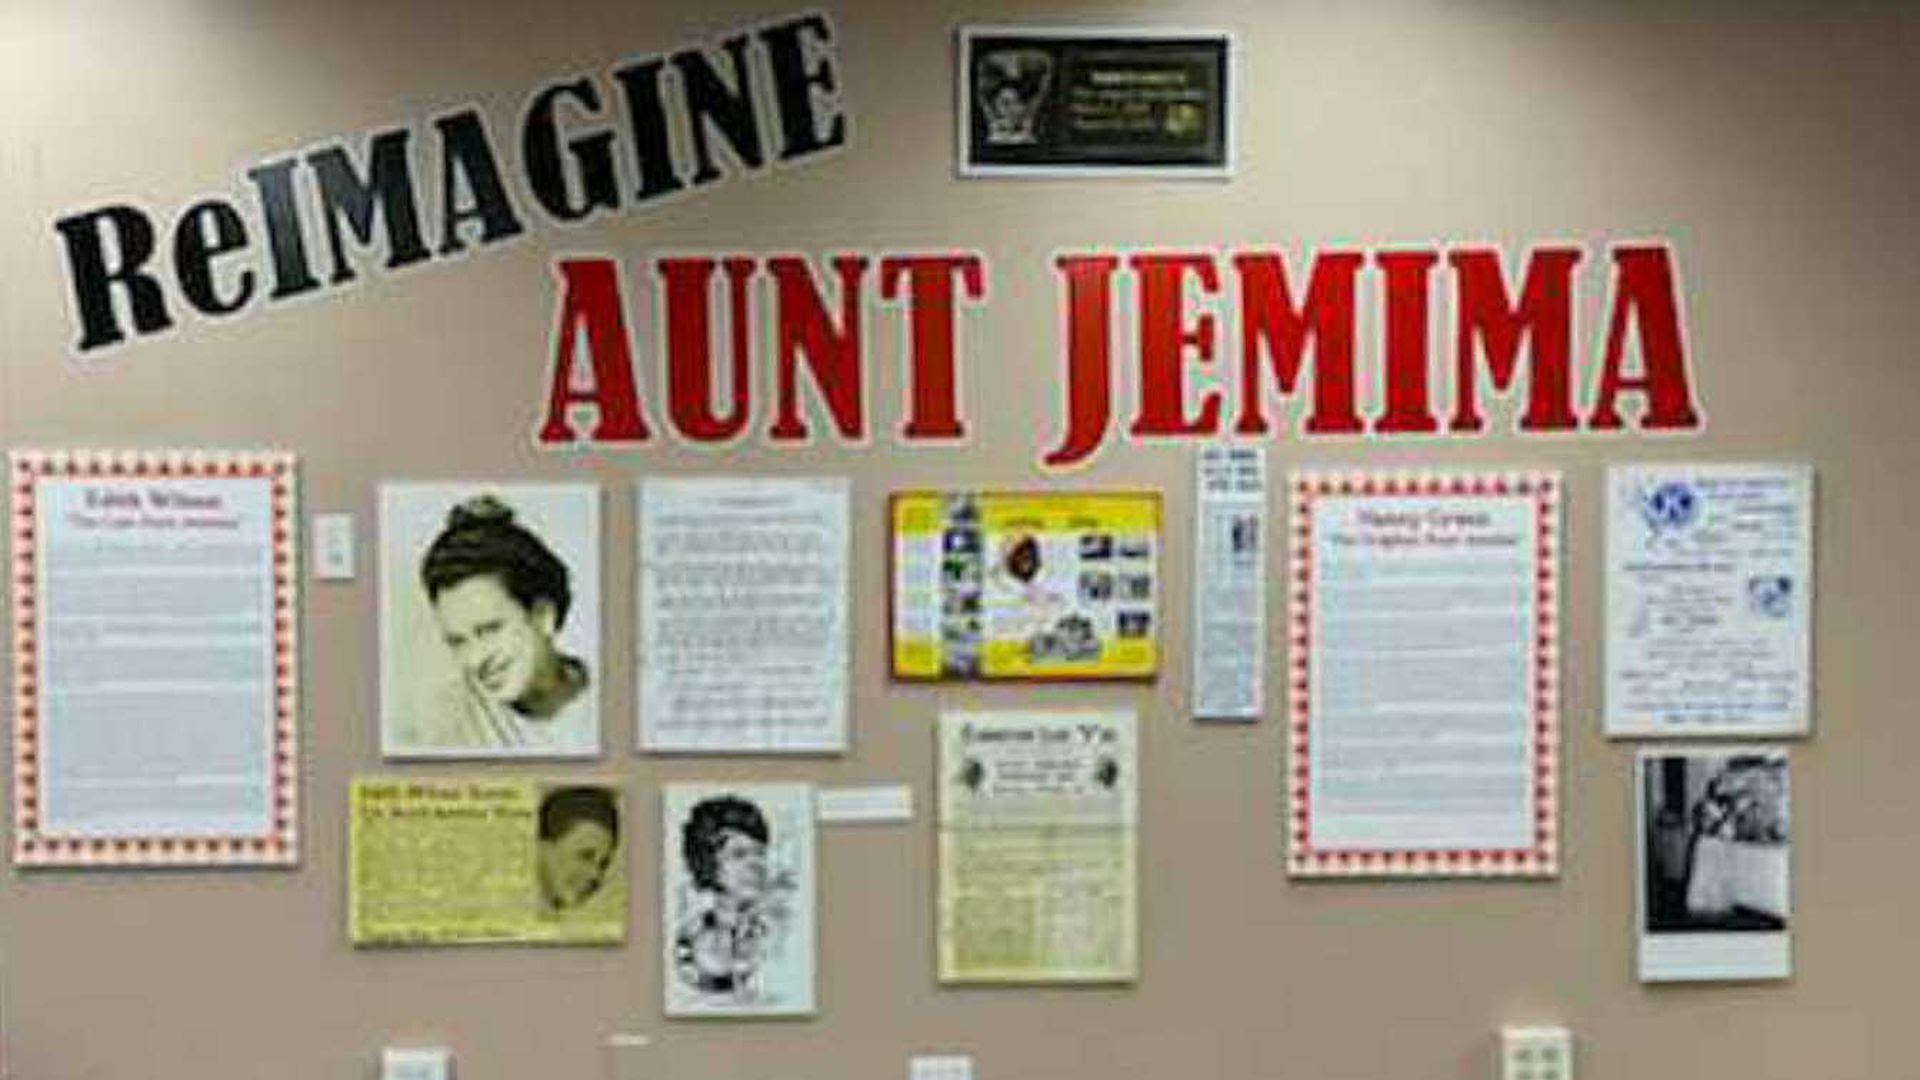 Chicago's Bronzeville Historical Society opens with the ReIMAGINE Aunt Jemima exhibit. 